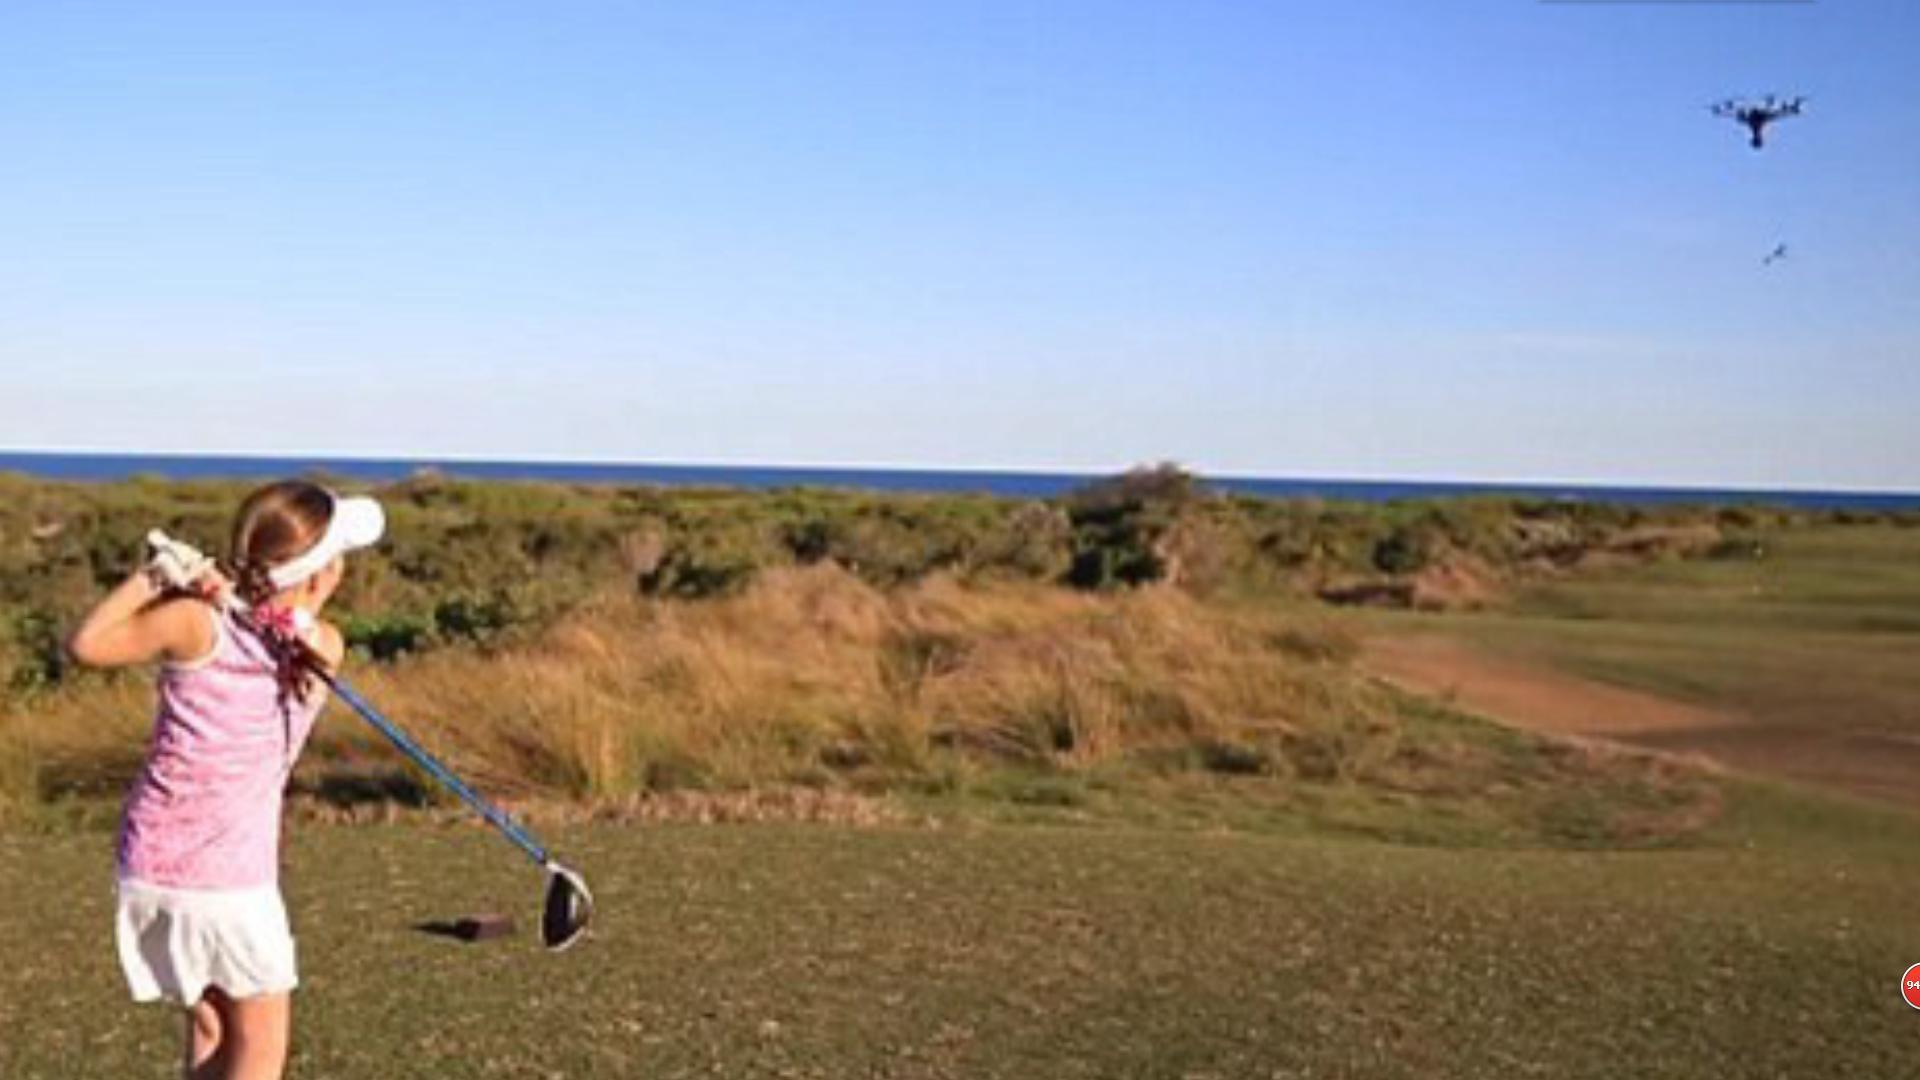 Australia 8 years old girls Golf bursting rod downed drone
